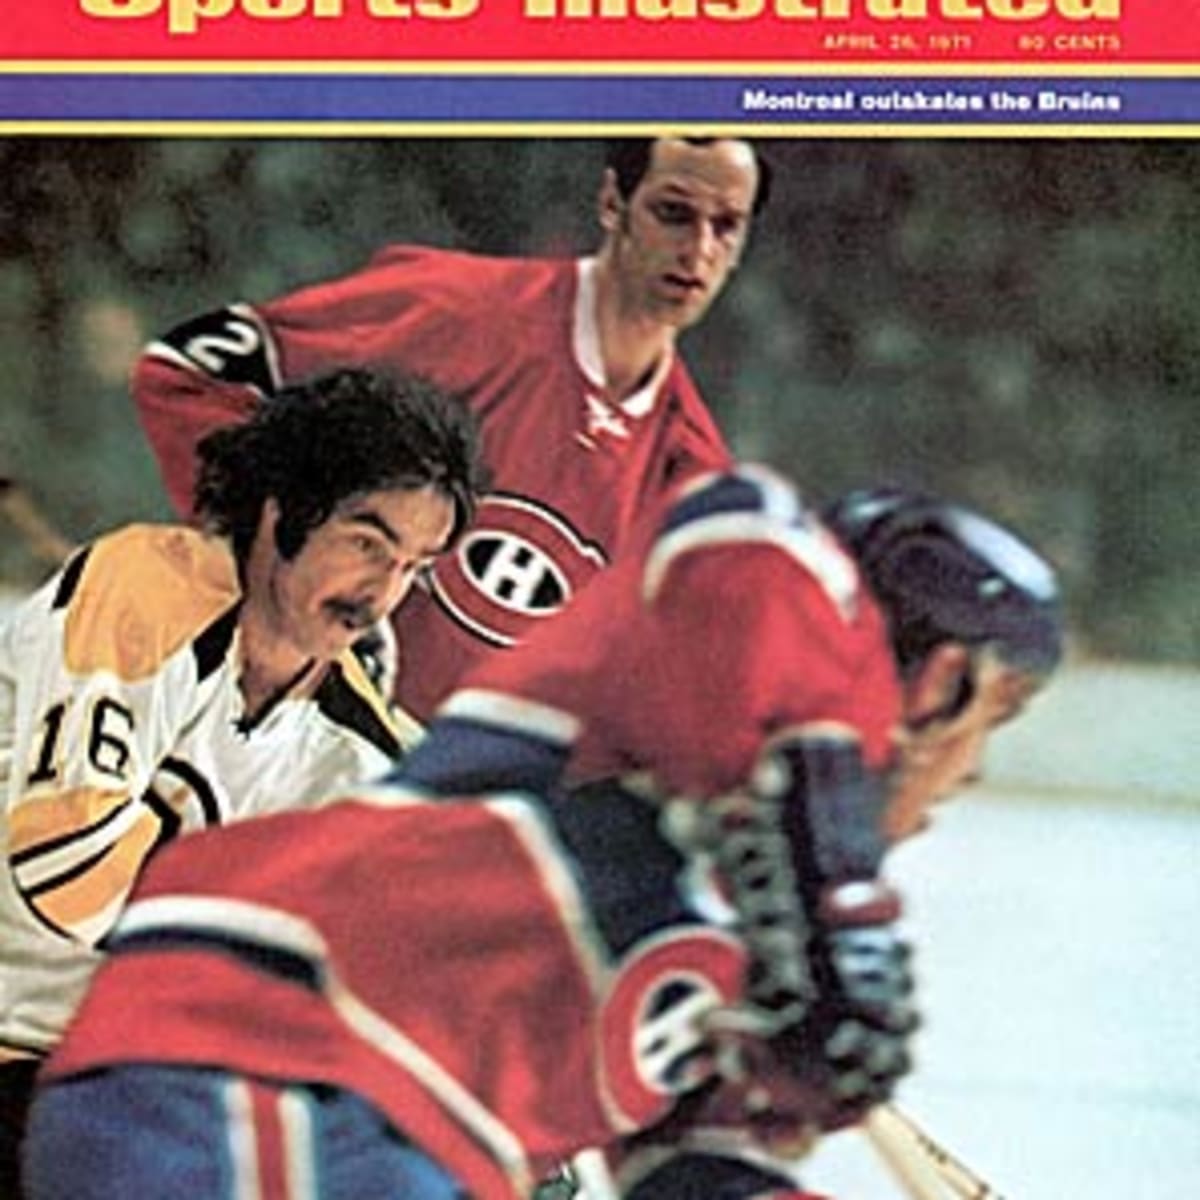 Hockey Digest May 1975 Derek Sanderson New York Rangers shipping label